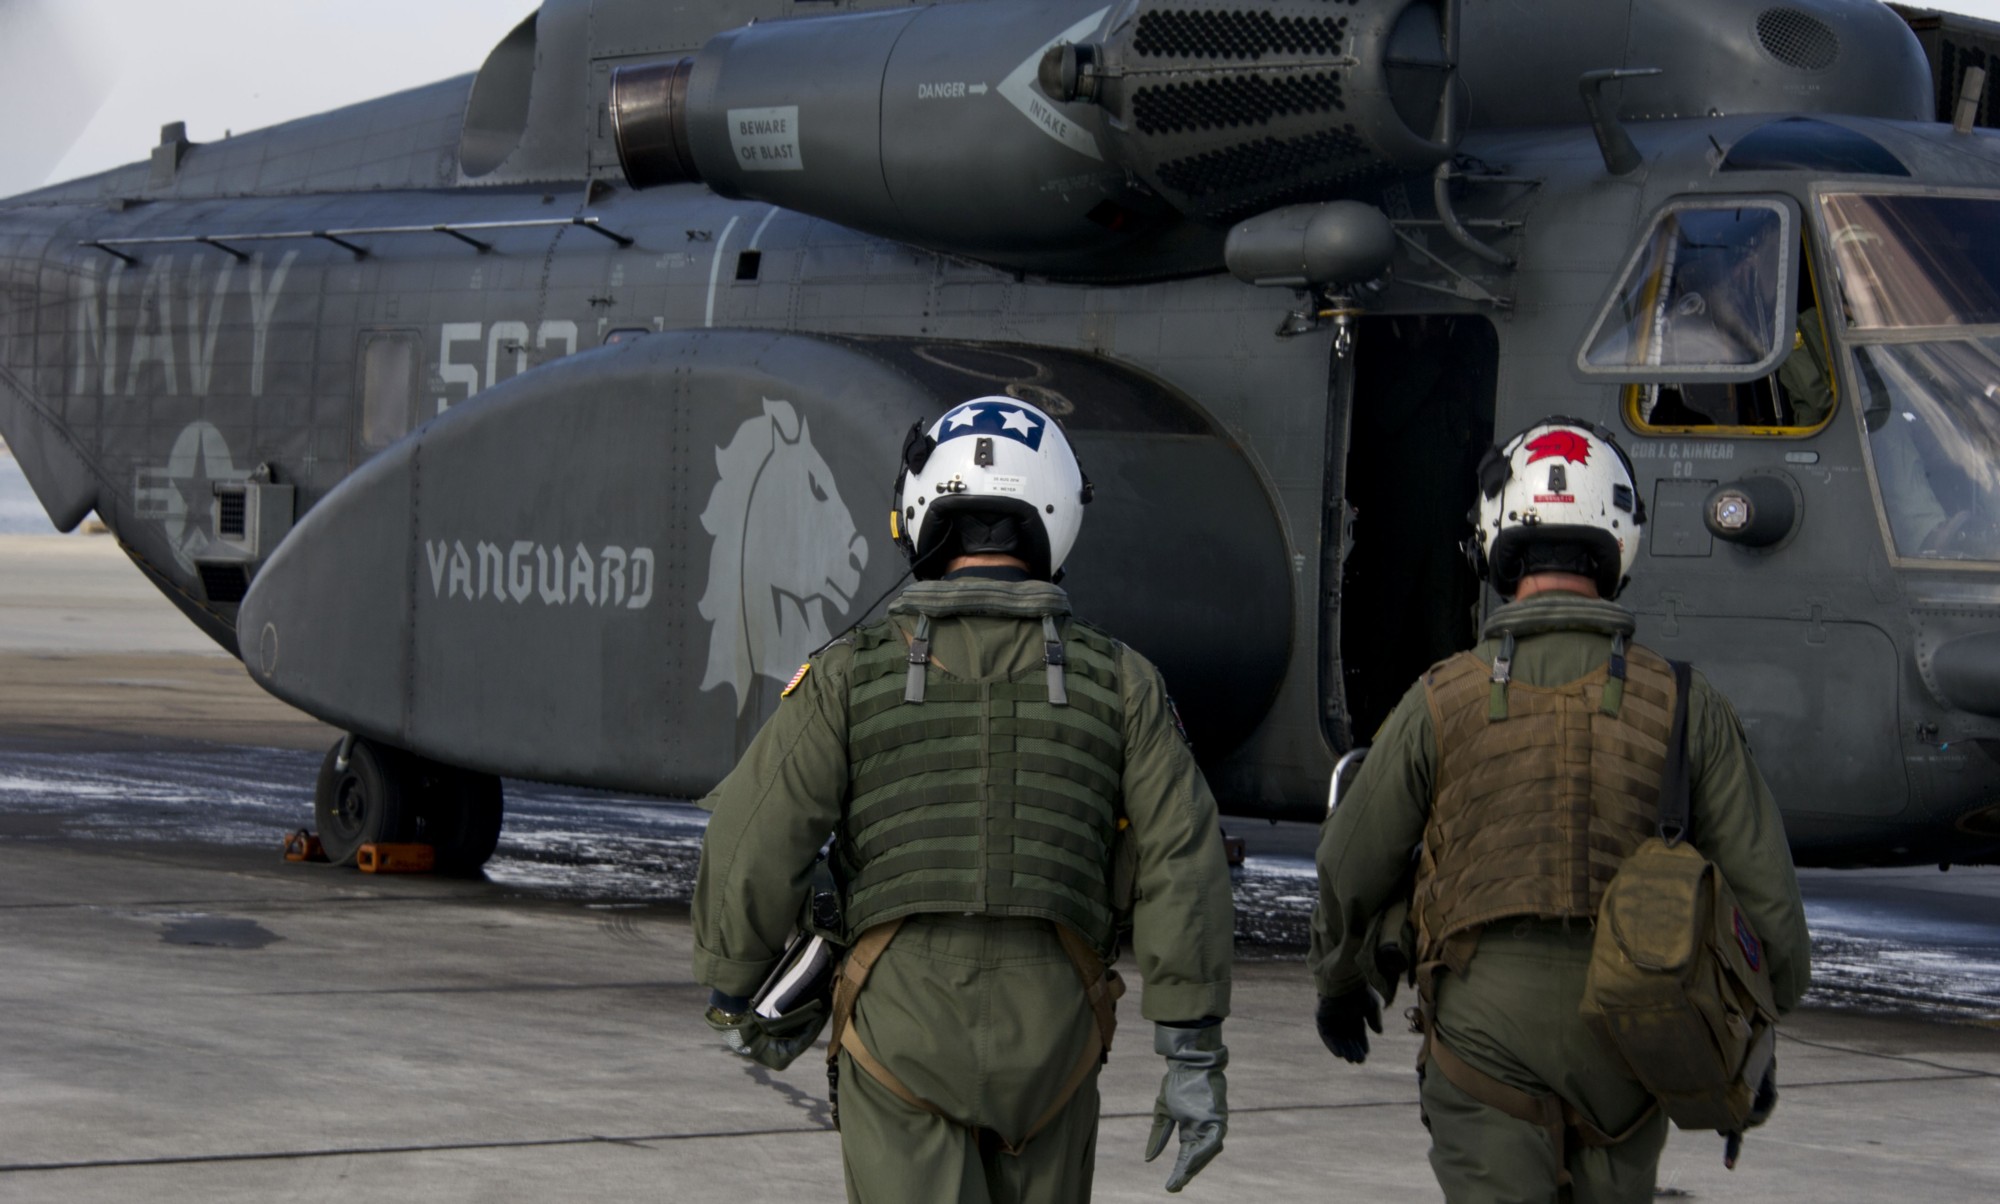 hm-14 vanguard helicopter mine countermeasures squadron navy mh-53e sea dragon 141